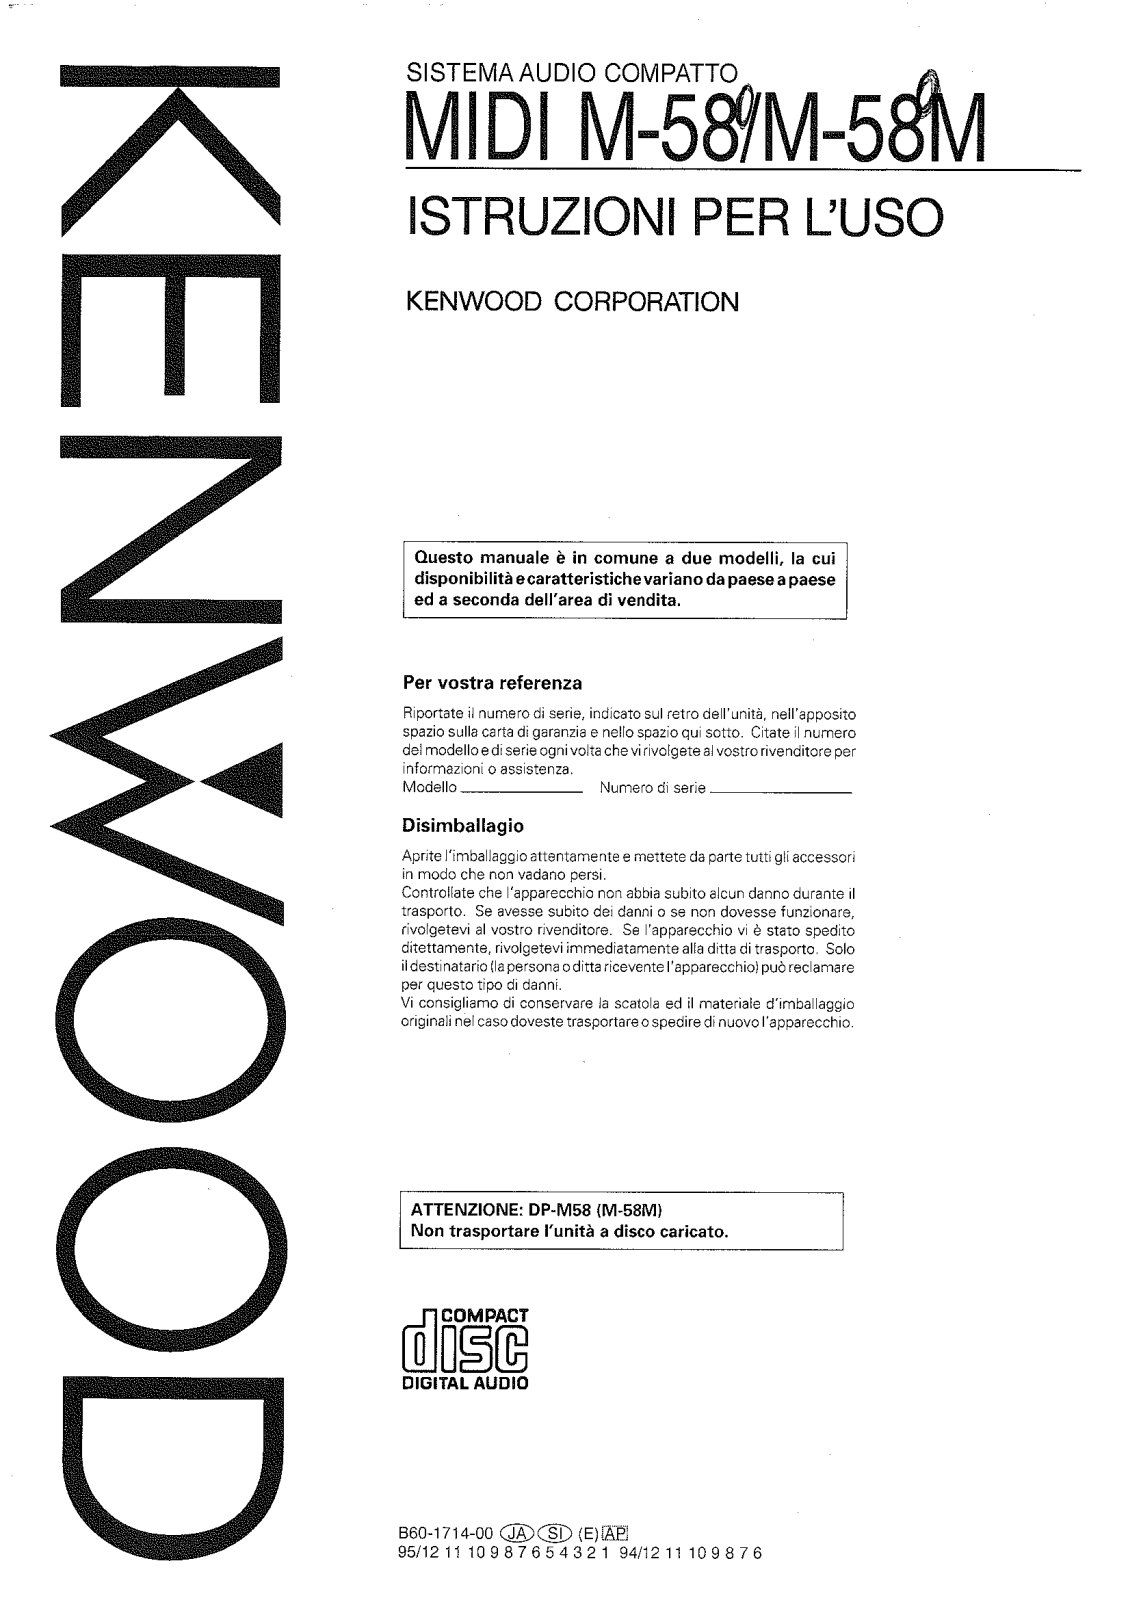 Kenwood MIDI M-580, M-580M Manual